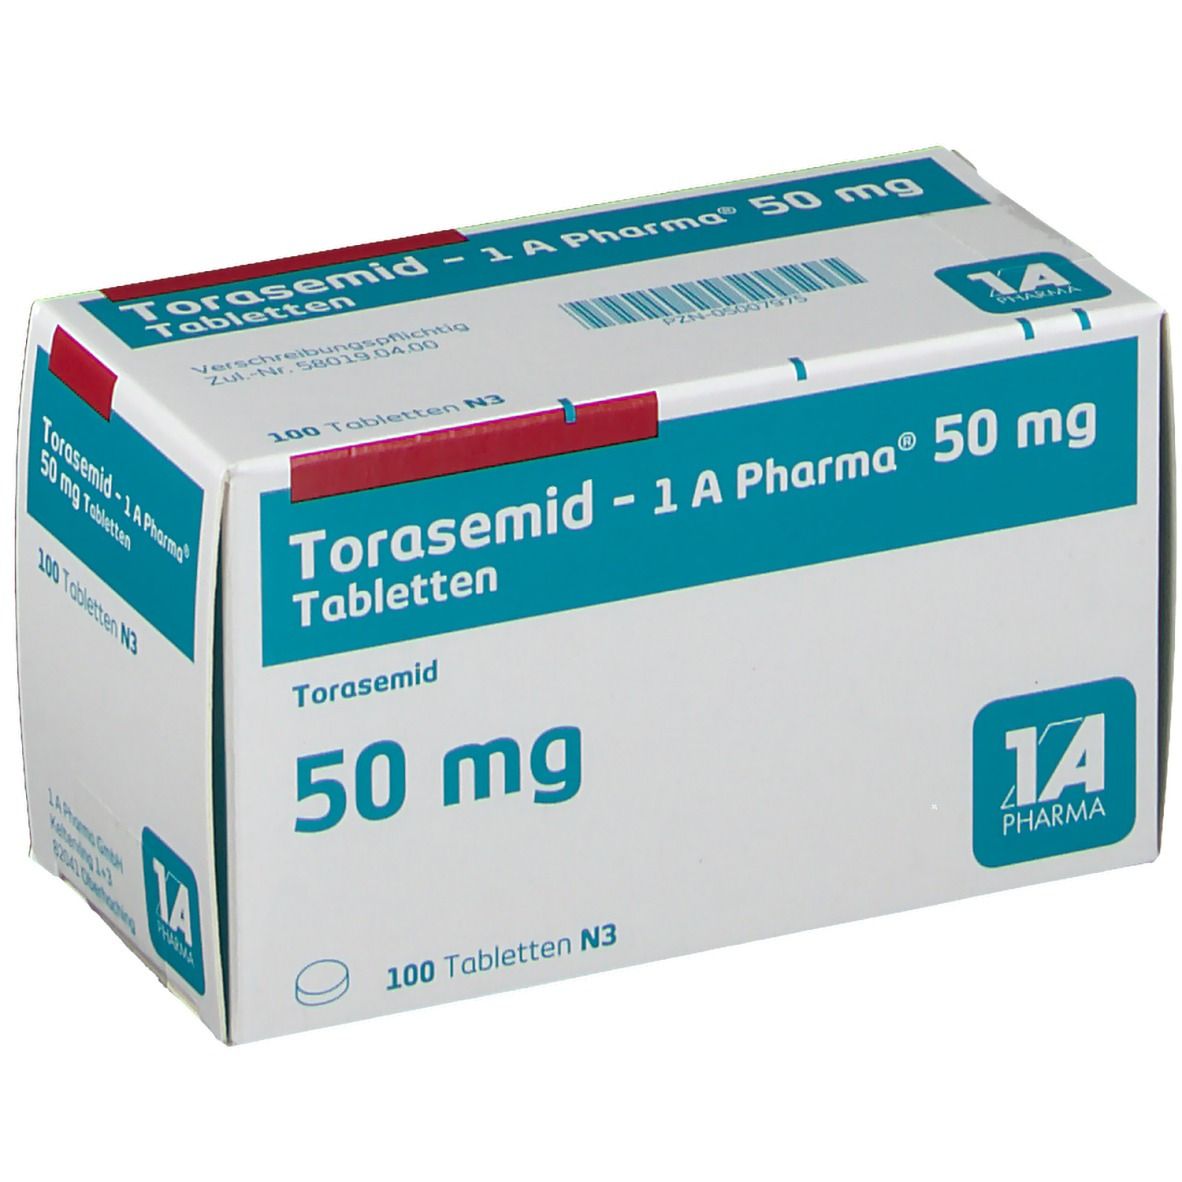 Torasemid 1A Pharma® 50Mg